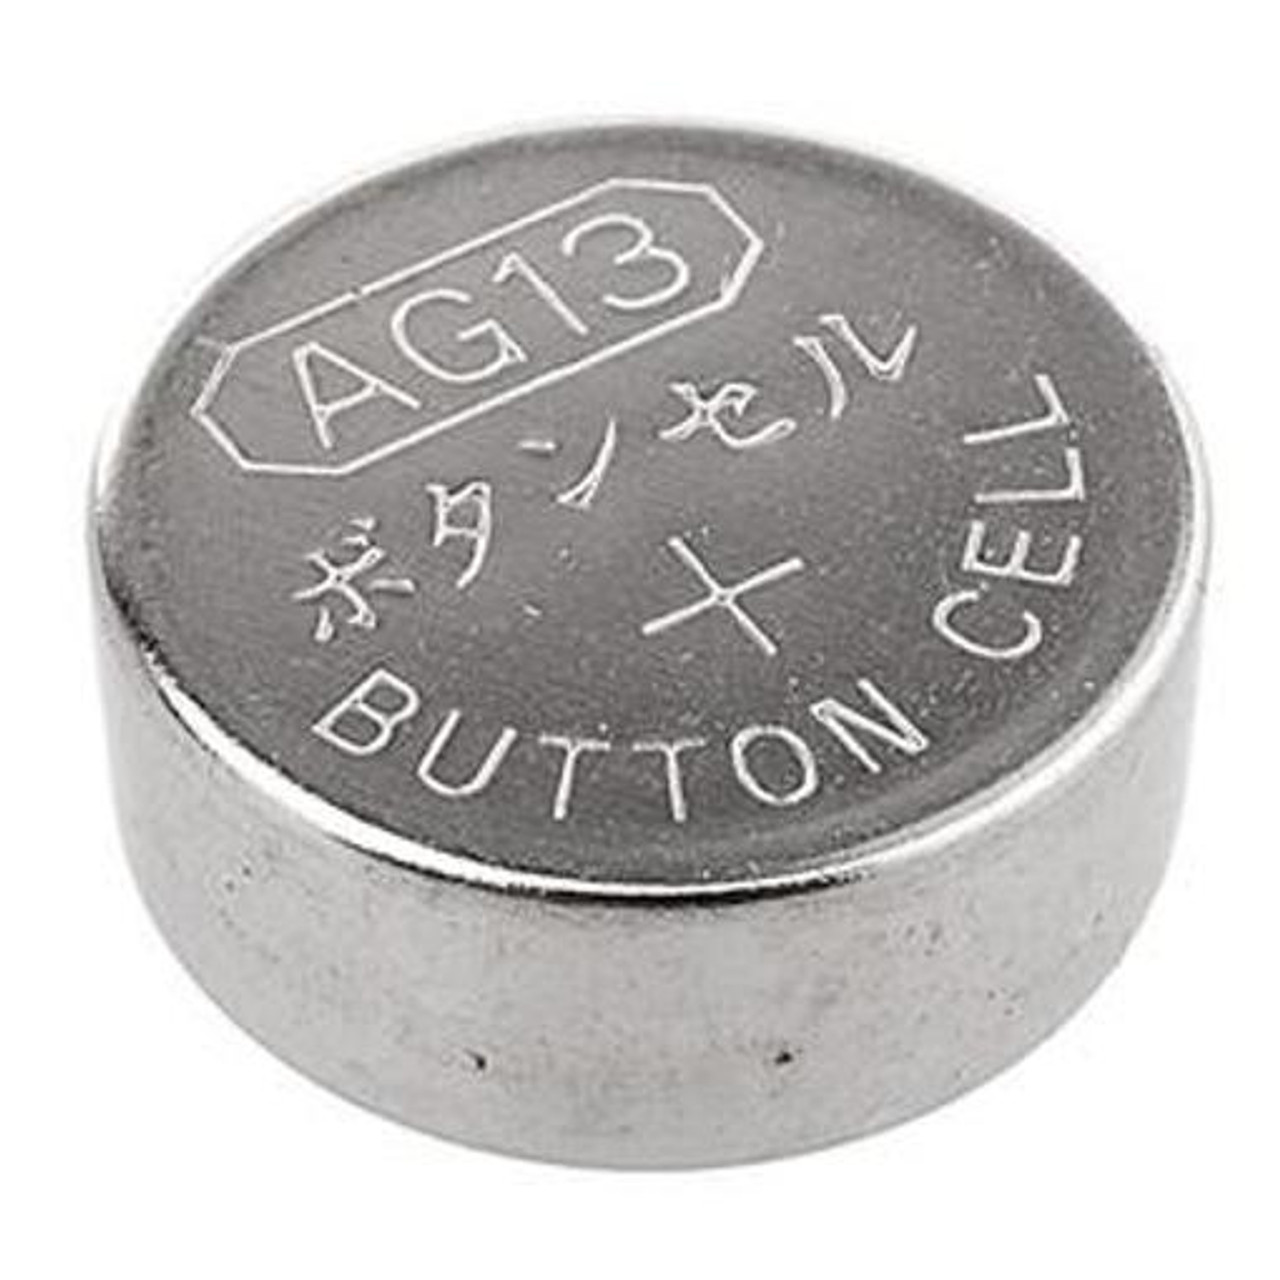 Battery 13. Элемент питания ag13. Ag13 button Cell. Lr44 ag13 батарейка 1.5 v3 .пальчиковая. Батарейка таблетка ag13.